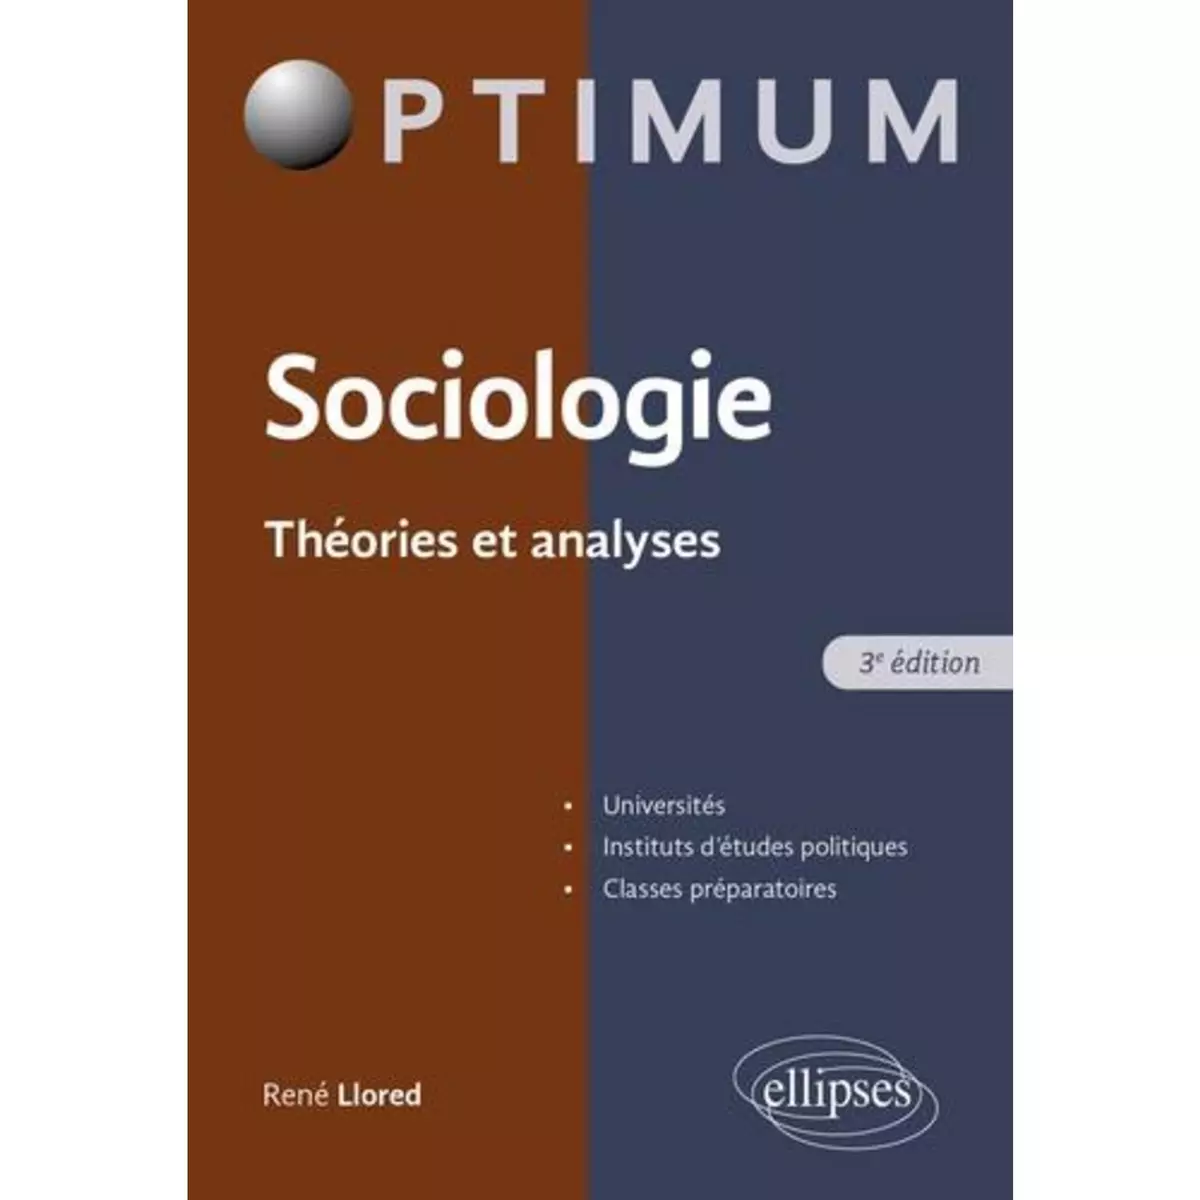  SOCIOLOGIE. THEORIES ET ANALYSES, 3E EDITION, Llored René